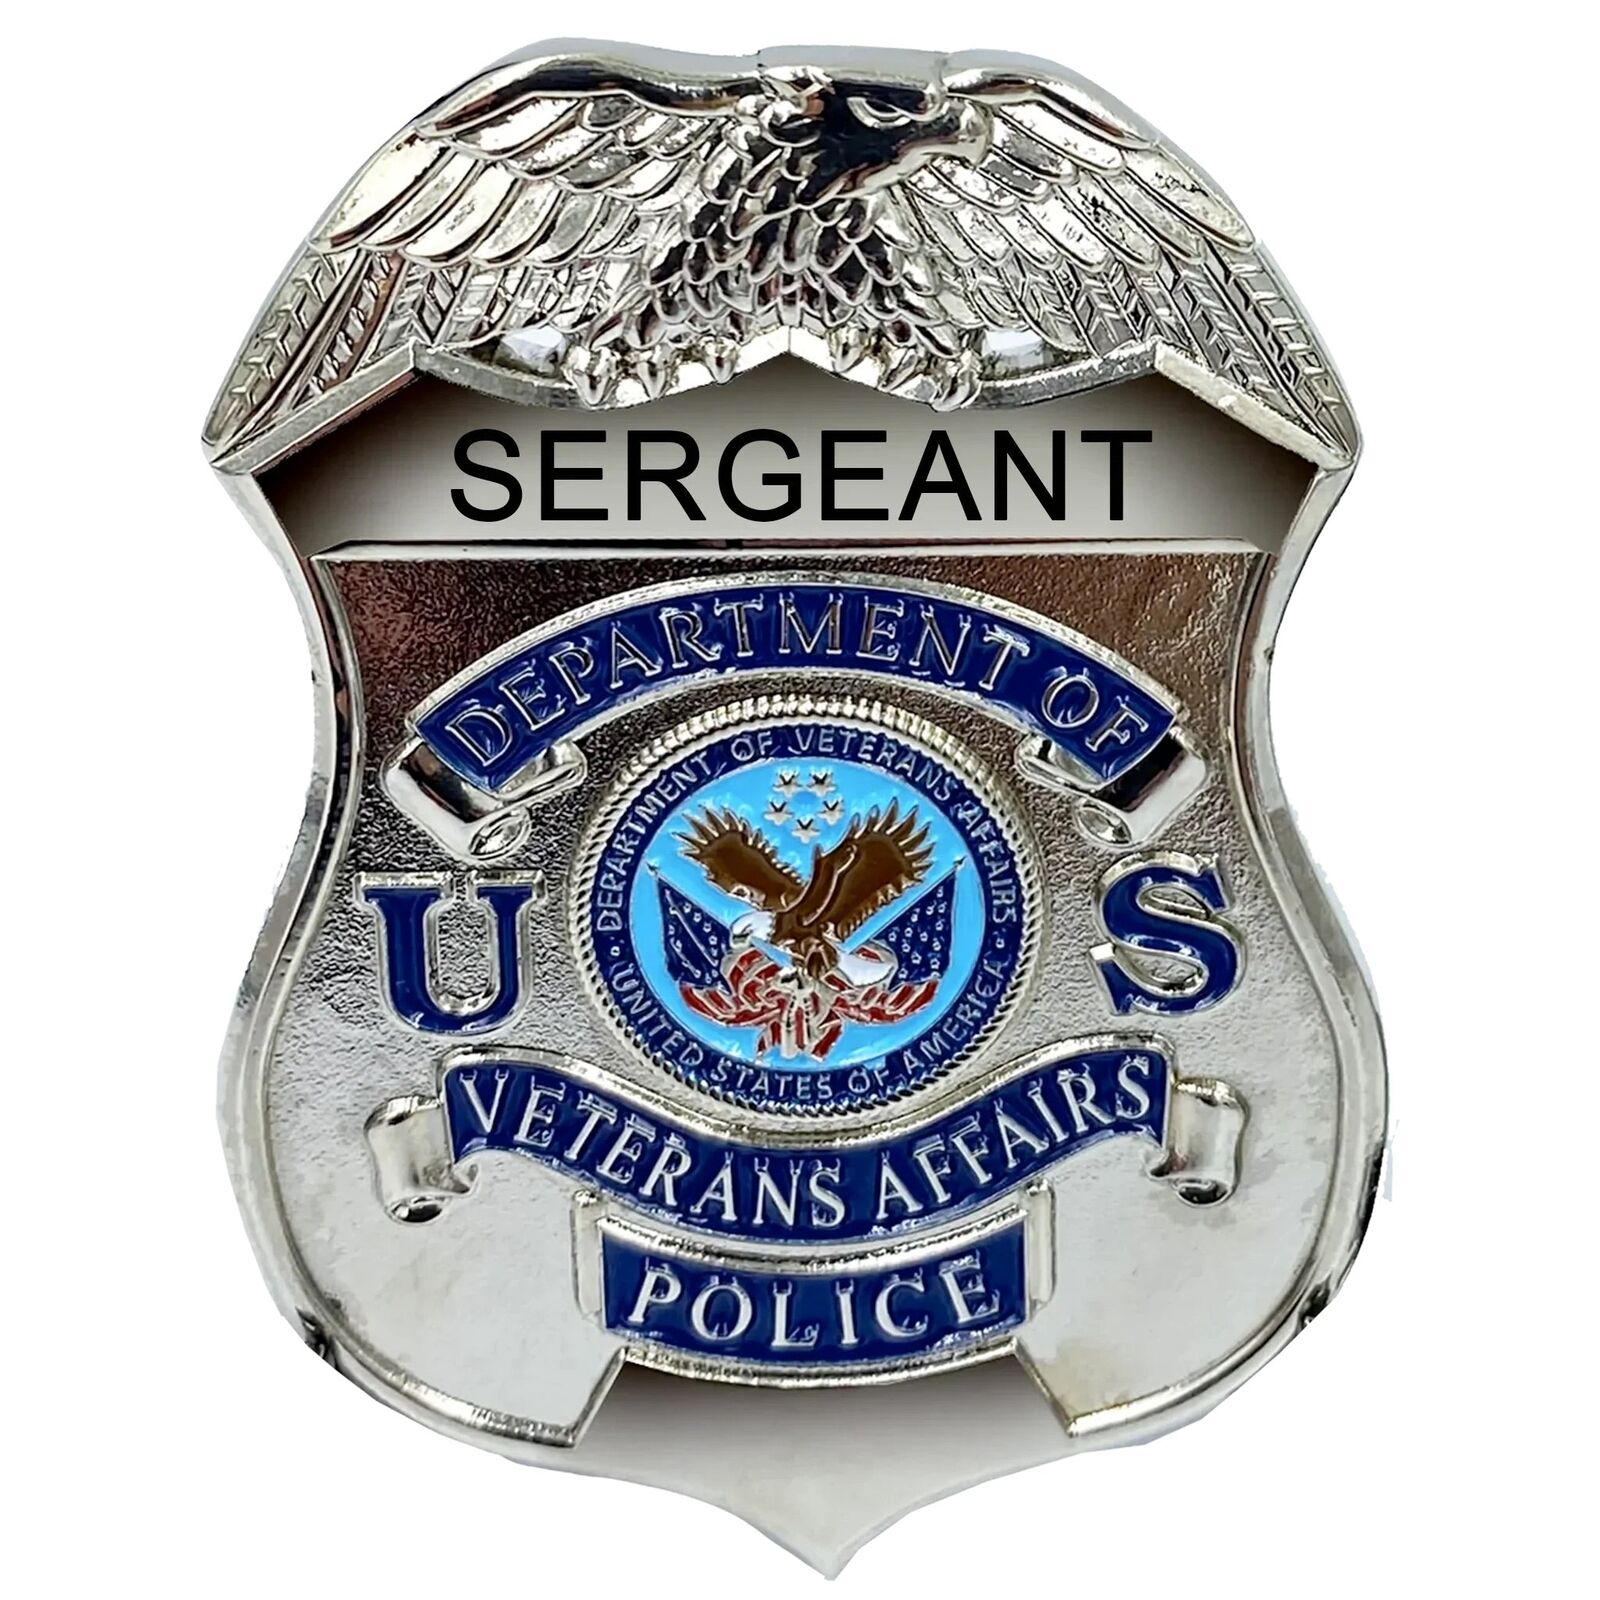 VA Veterans Affairs Administration lapel pin for SERGEANT Police Officer PBX-004